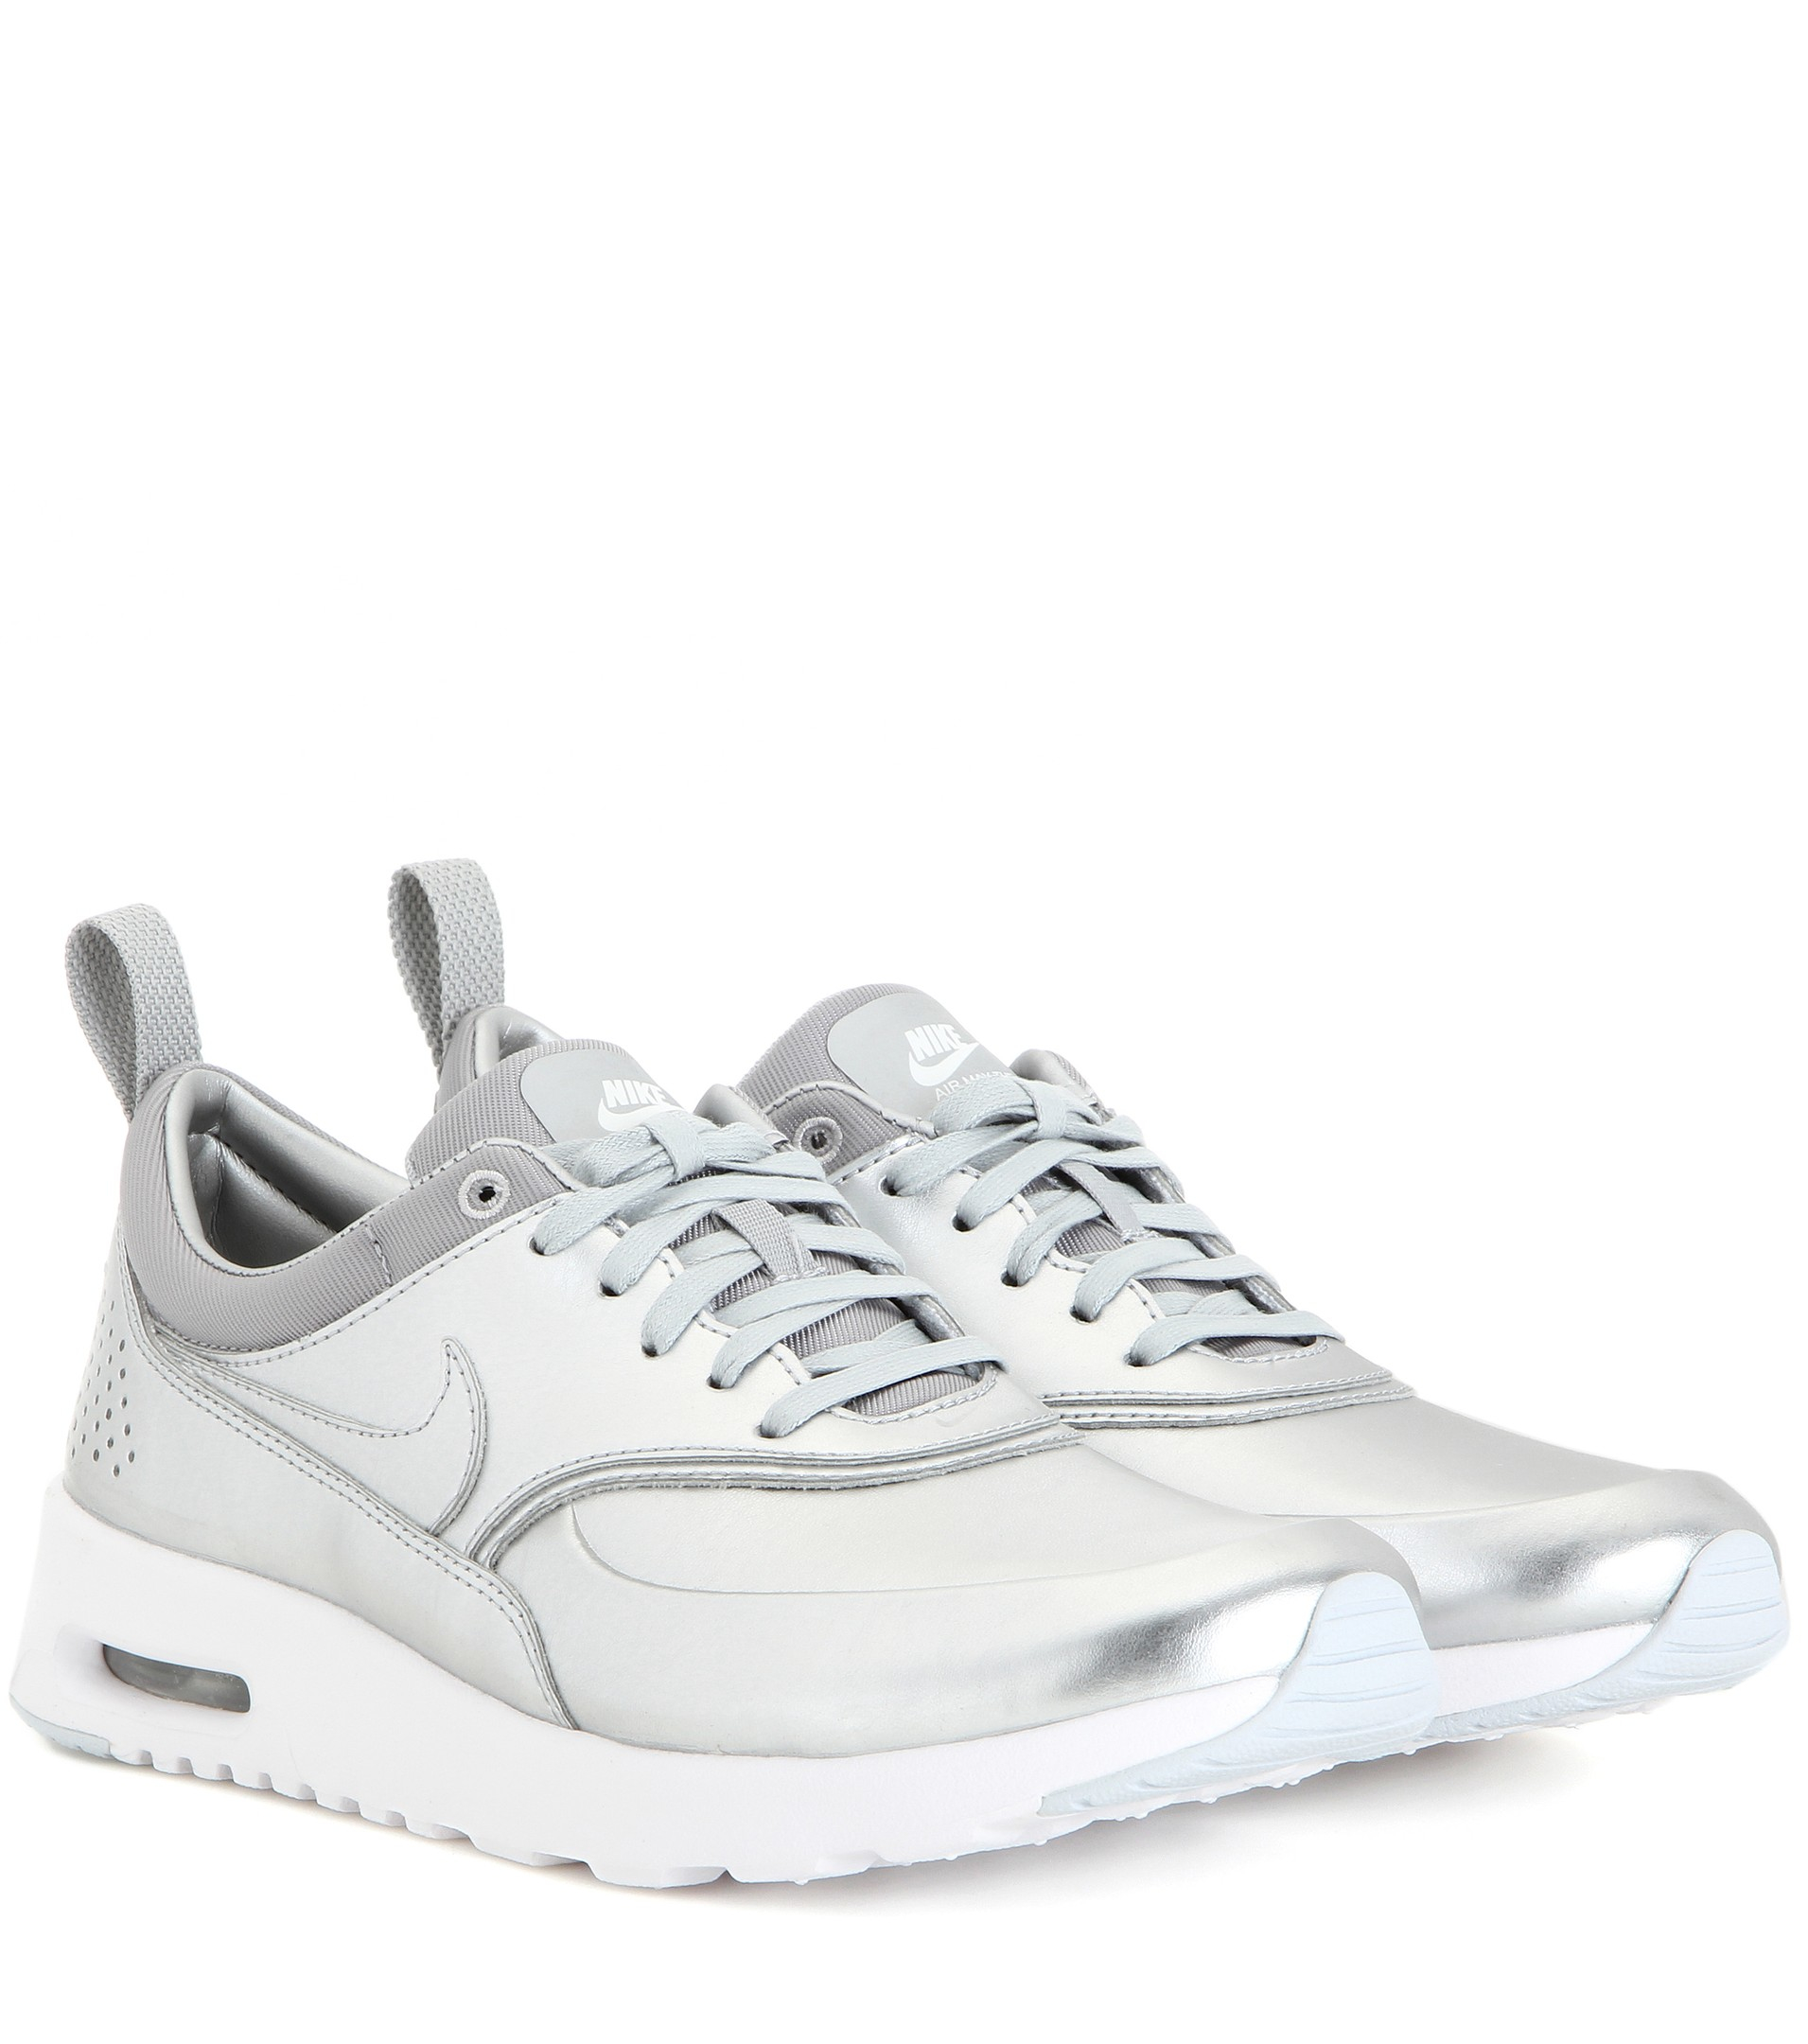 Nike Air Max Thea Metallic Silver Sneakers - Lyst